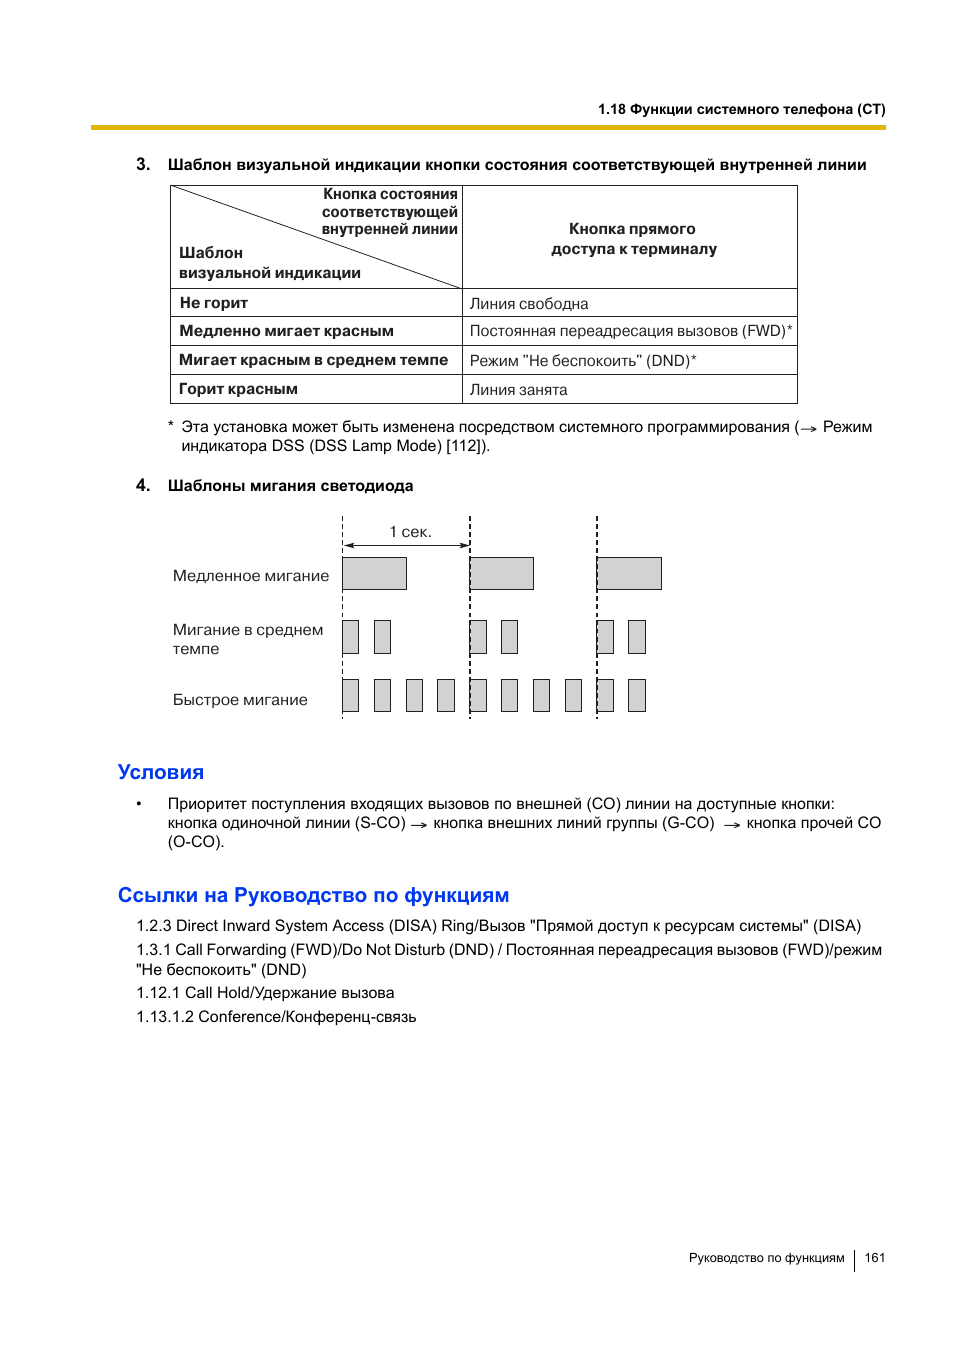 Условия, Ссылки на руководство по функциям | Инструкция по эксплуатации Panasonic KX-TEA308RU | Страница 161 / 318